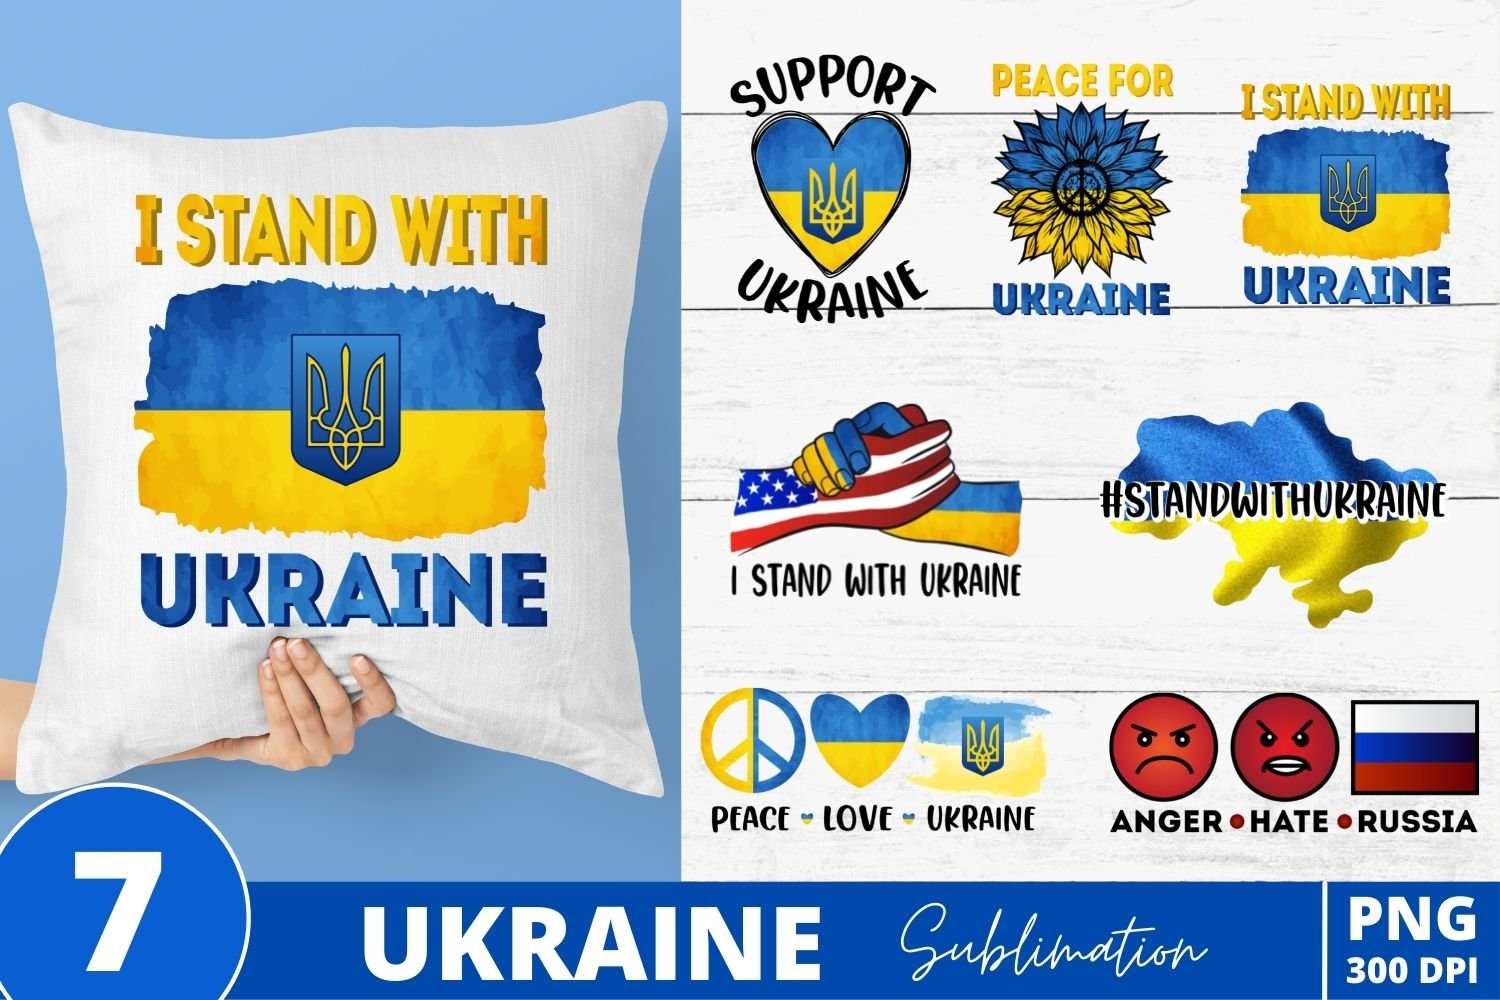 Ukraine Sublimation cover image.